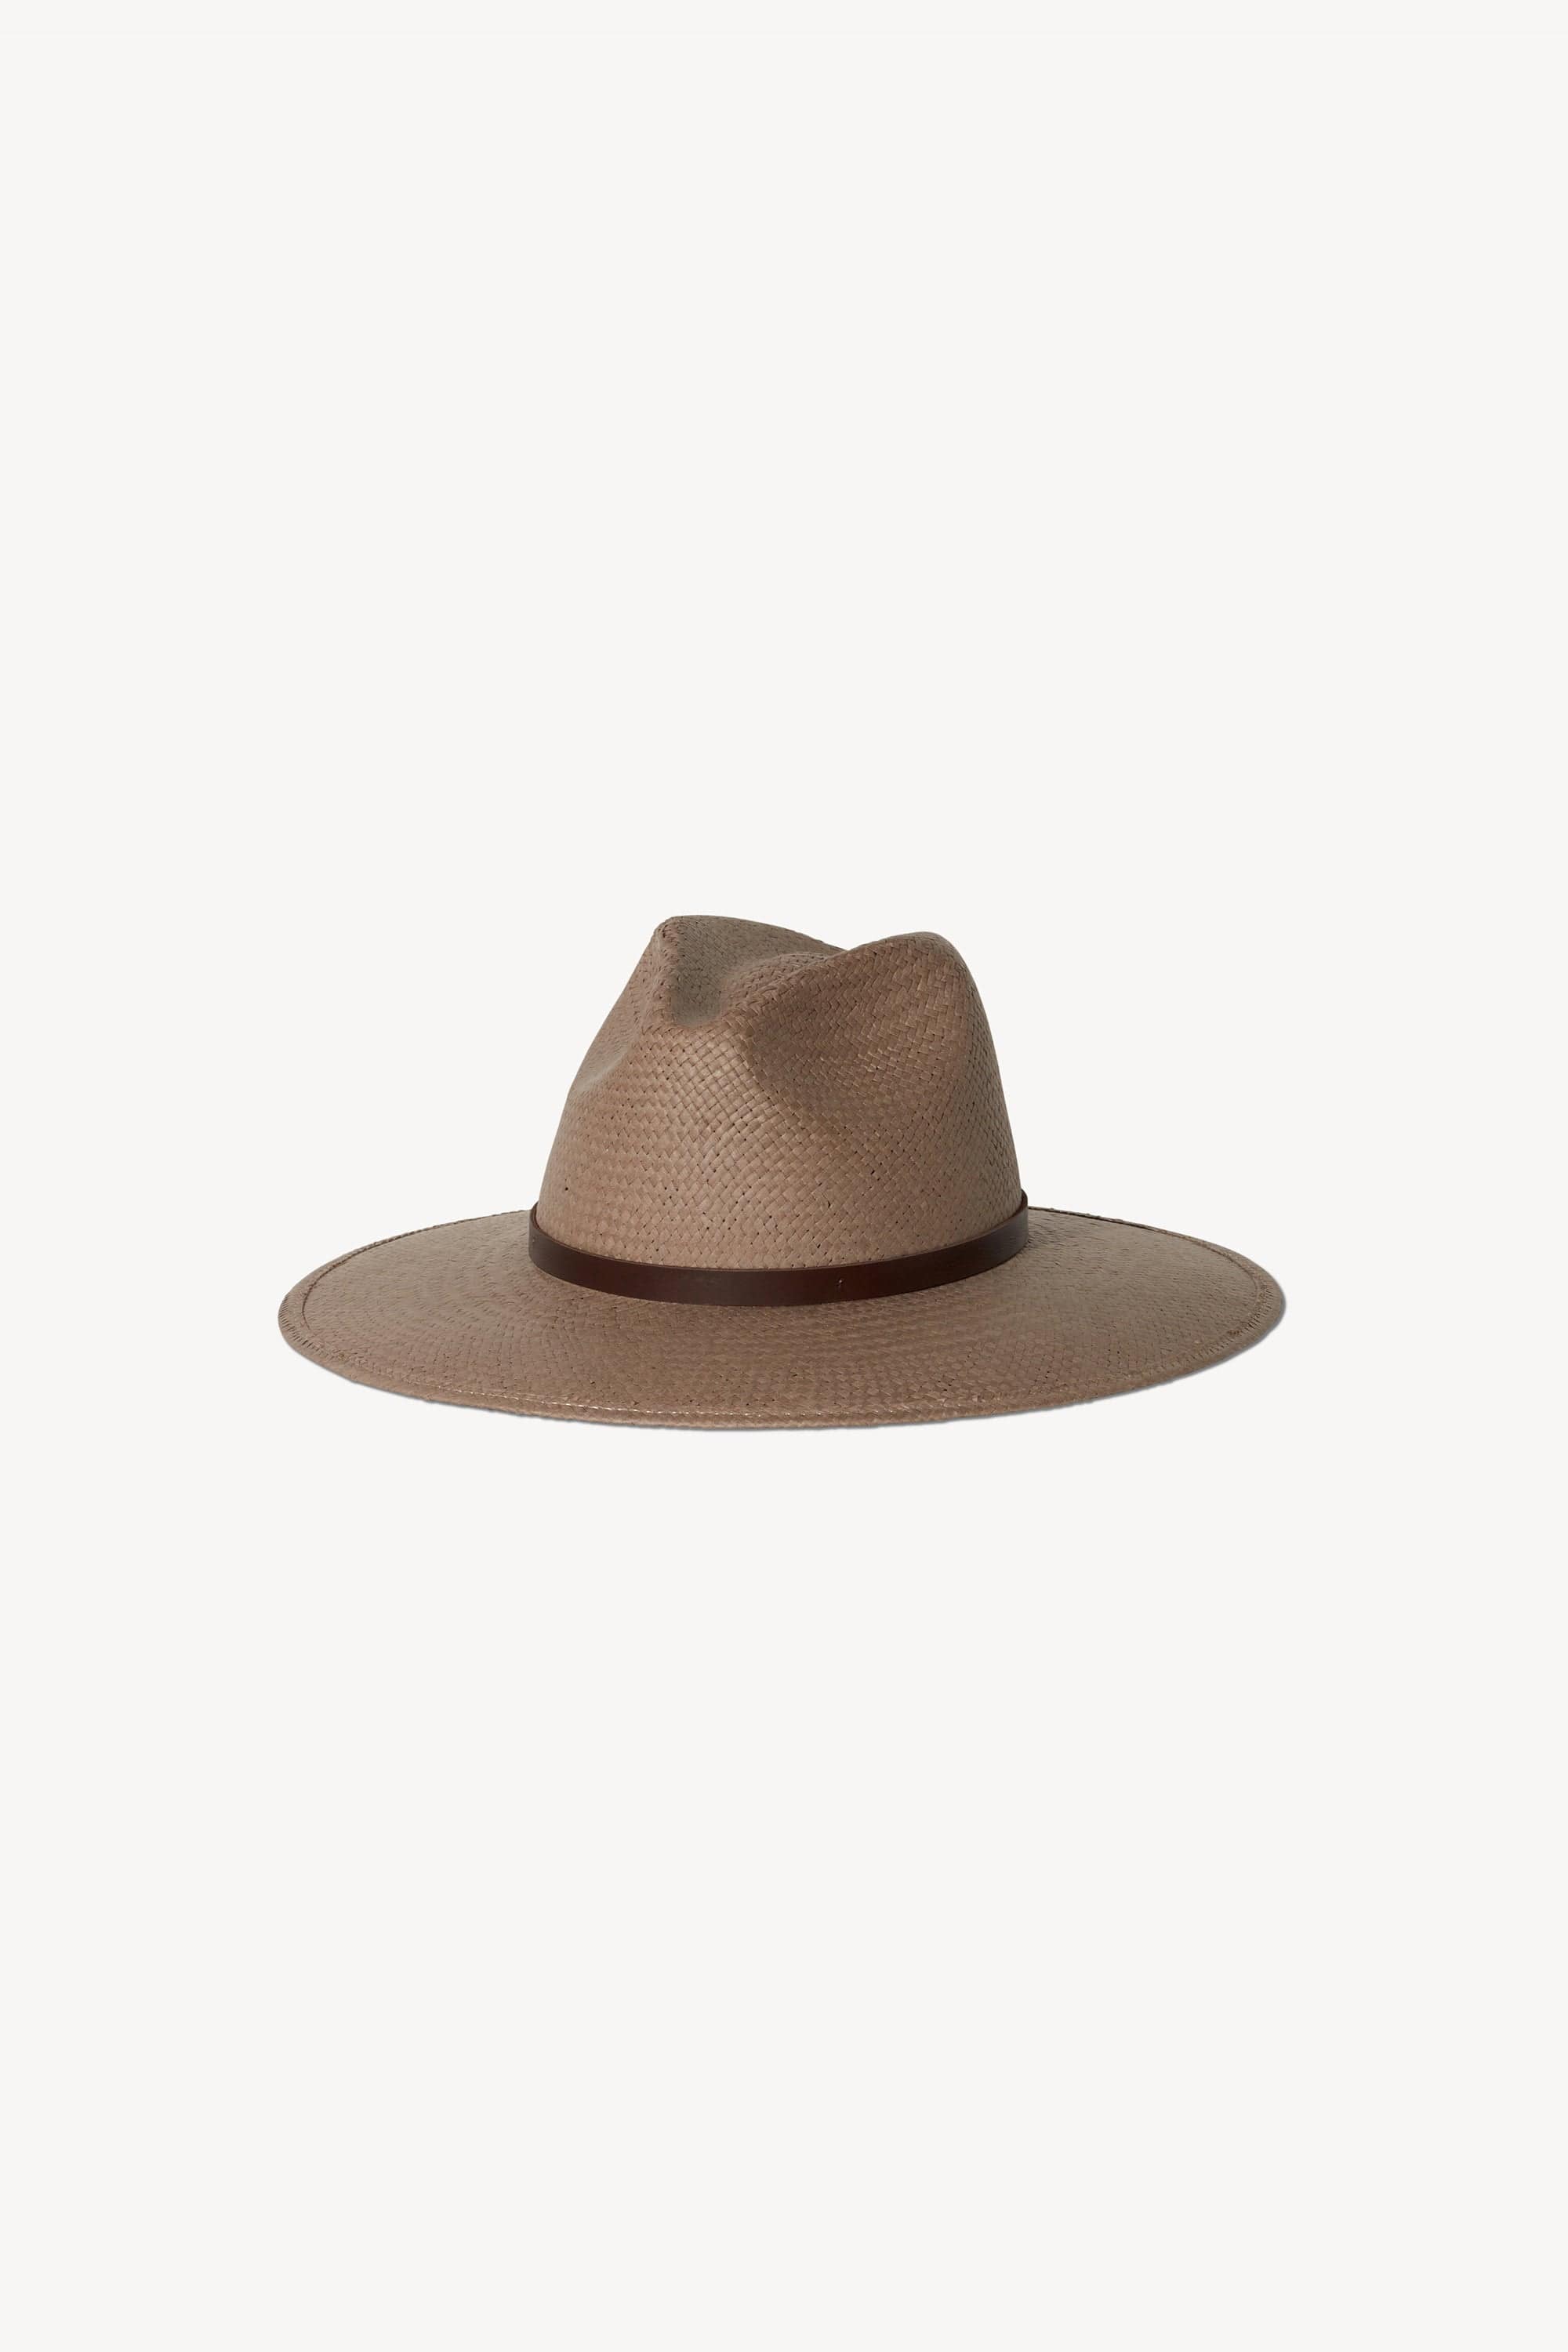 Adjustable Wide Brim Janessa Leone Bucket Hat For Trendy Unisex Casual Wear  From Bmwmini, $22.58